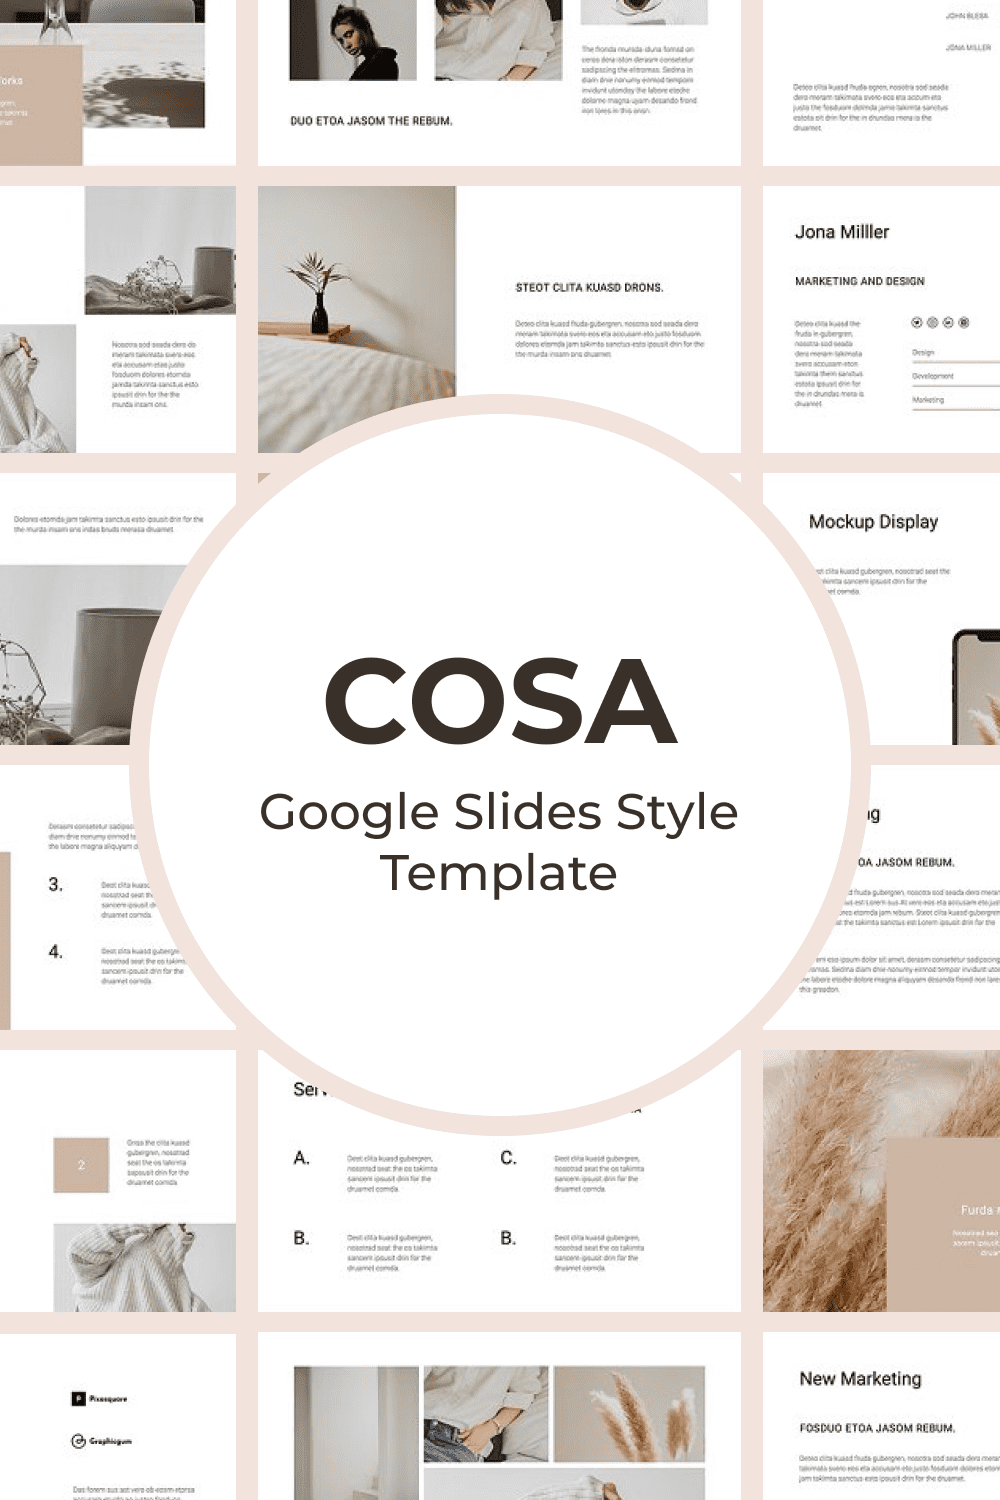 Pinterest COSA Google Slides Style Template.